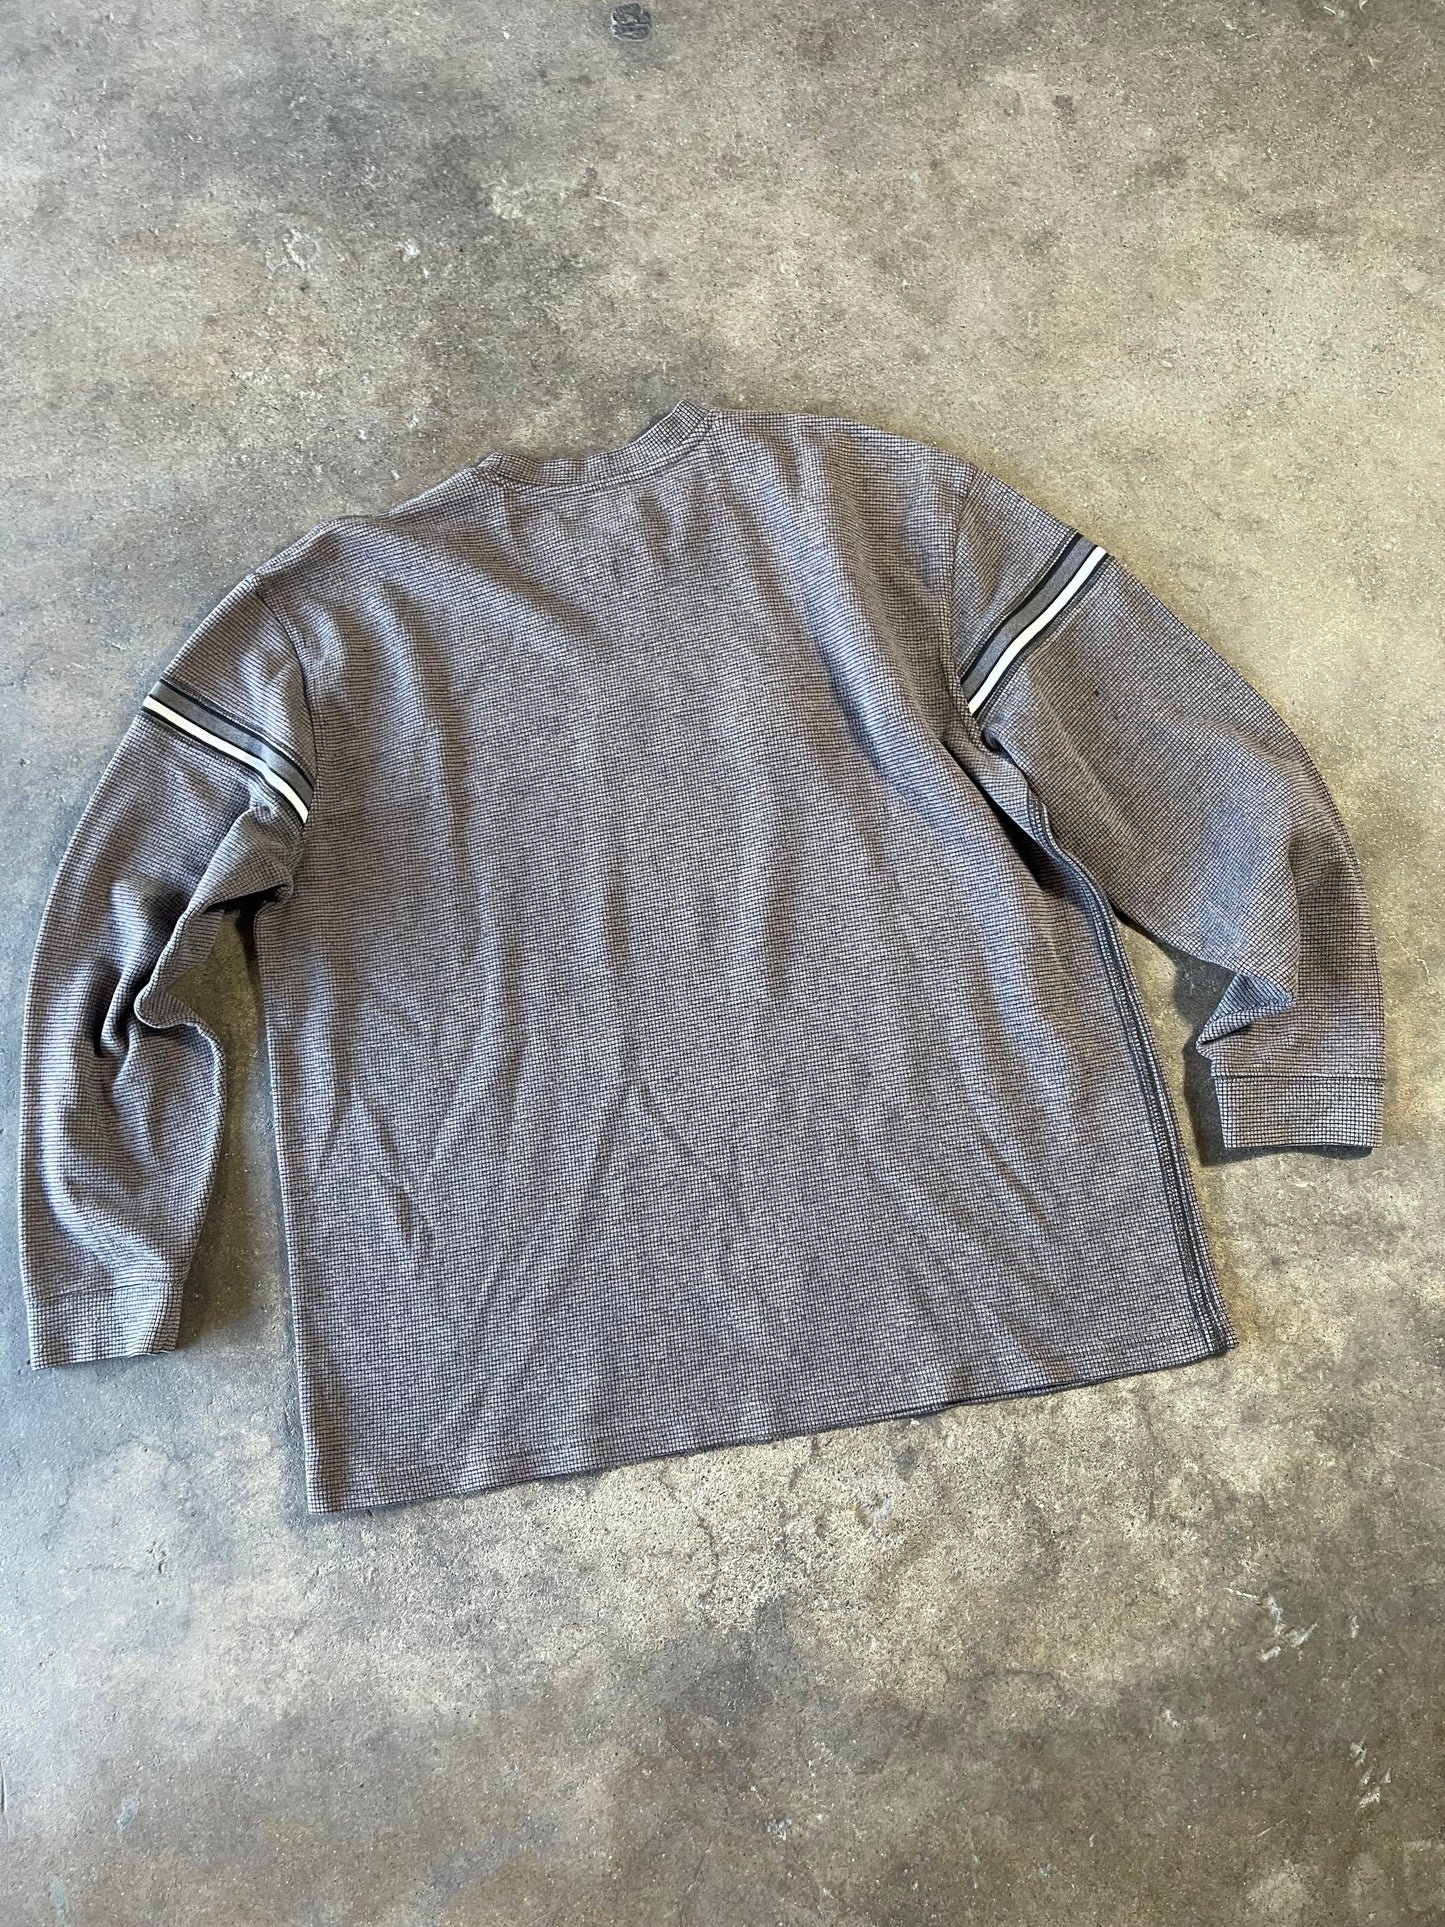 00’s Gray Striped Sweater XL